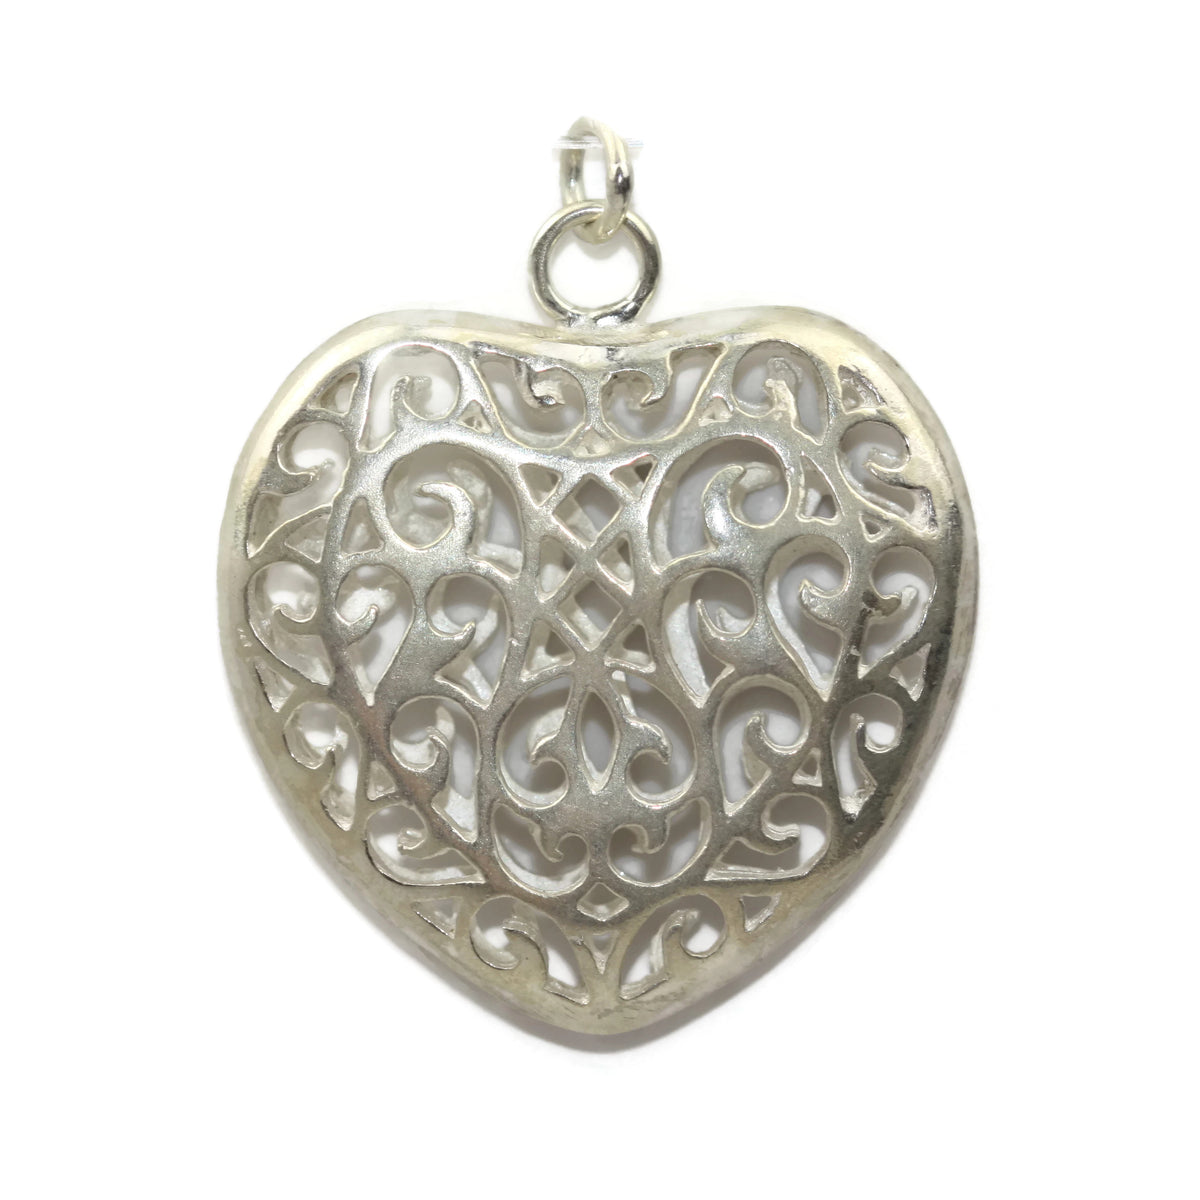 Handmade Sterling Silver Decorative Heart Pendant 31 mm